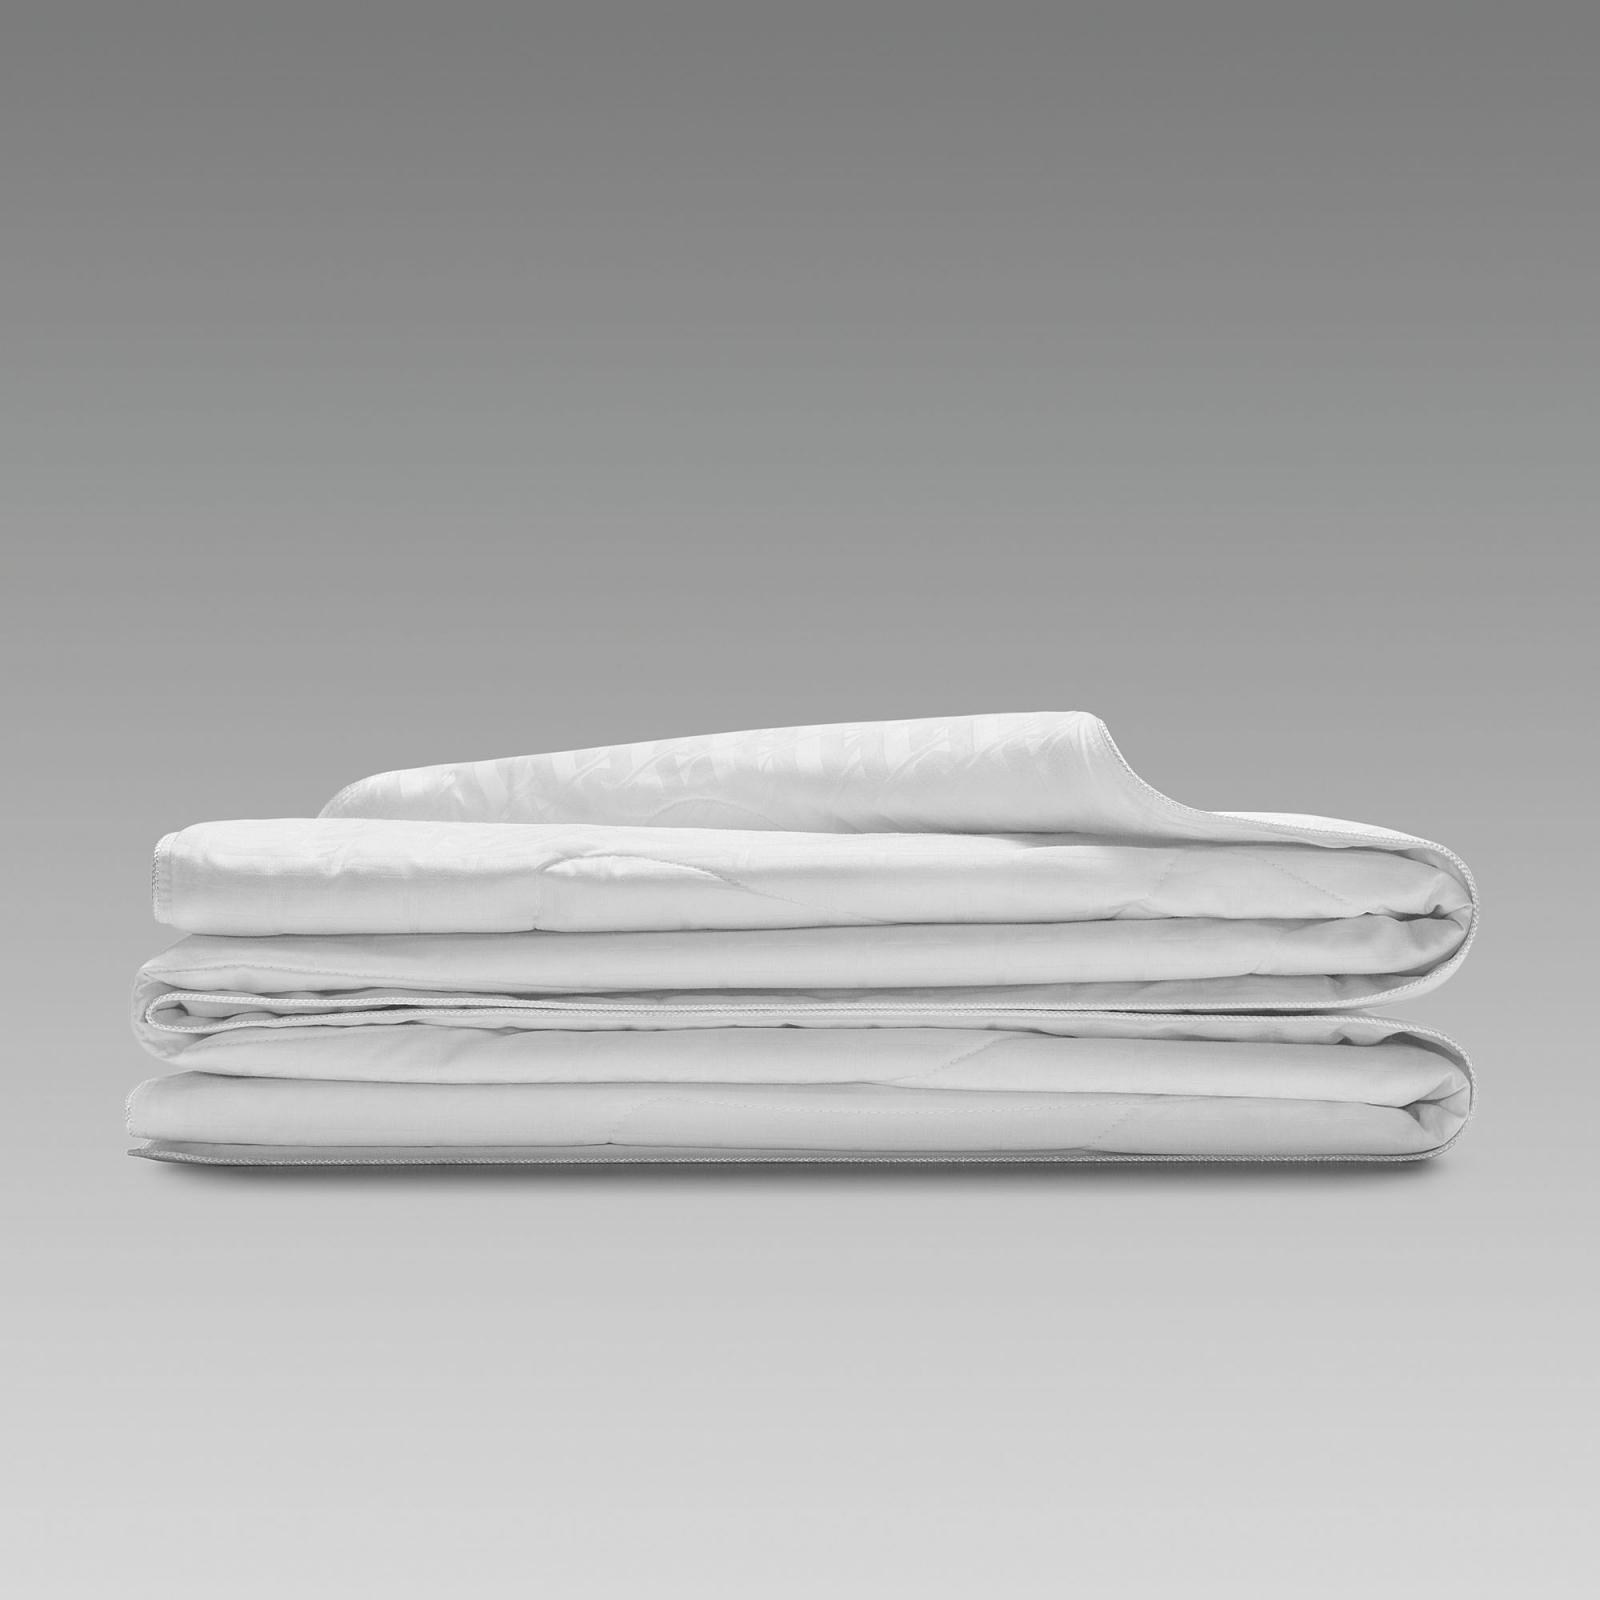 Одеяло Селена лайт Togas 140х200, размер 140х200 см - фото 5